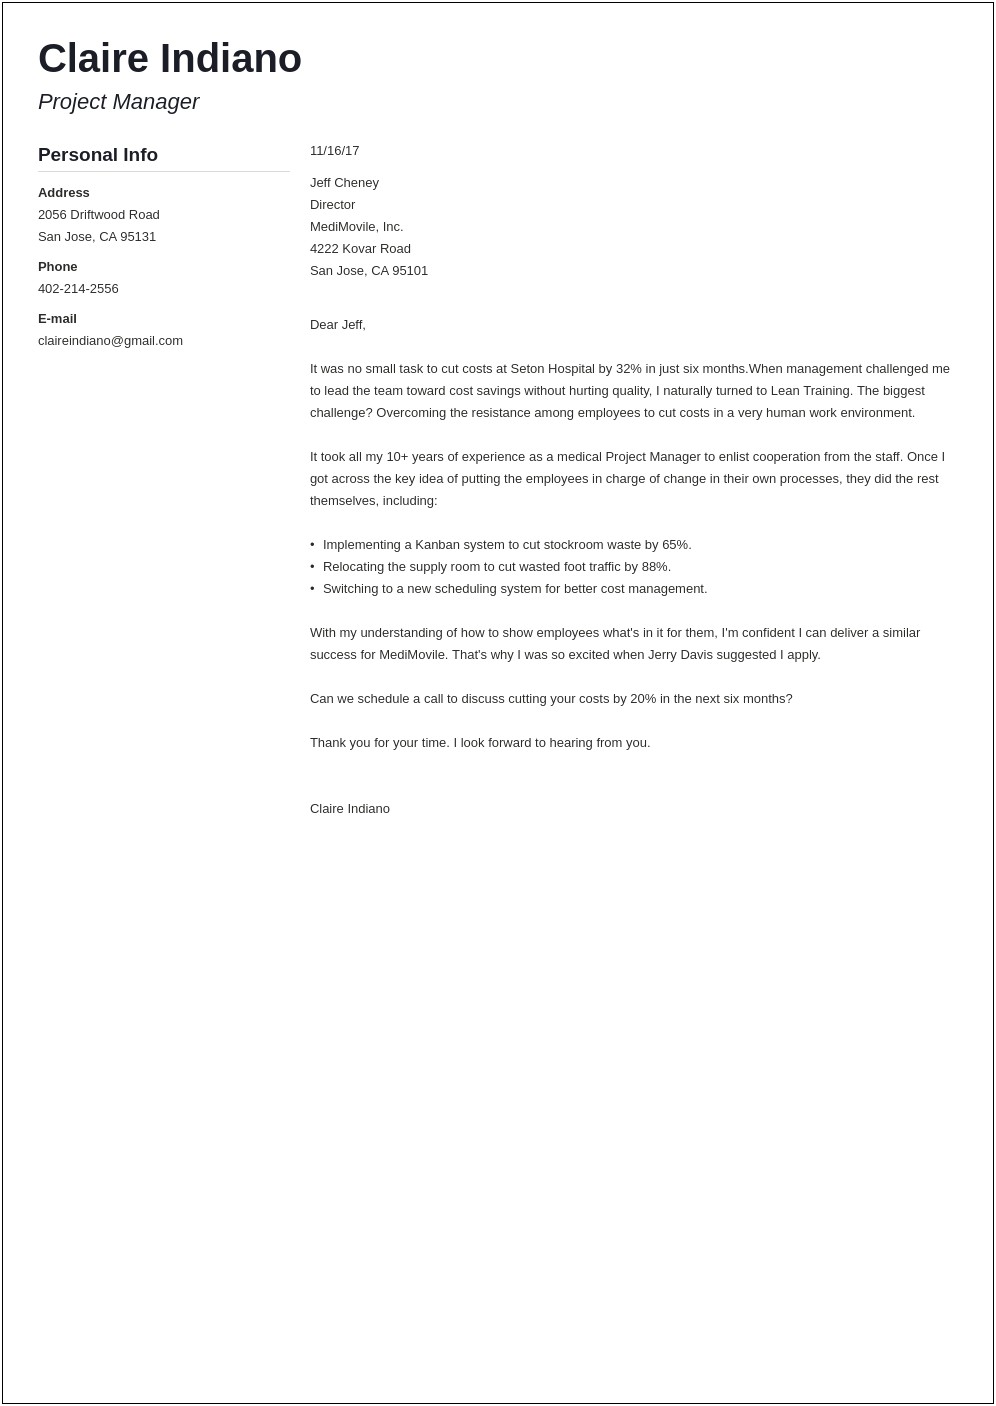 Resume Cover Letter For Engineering Internship